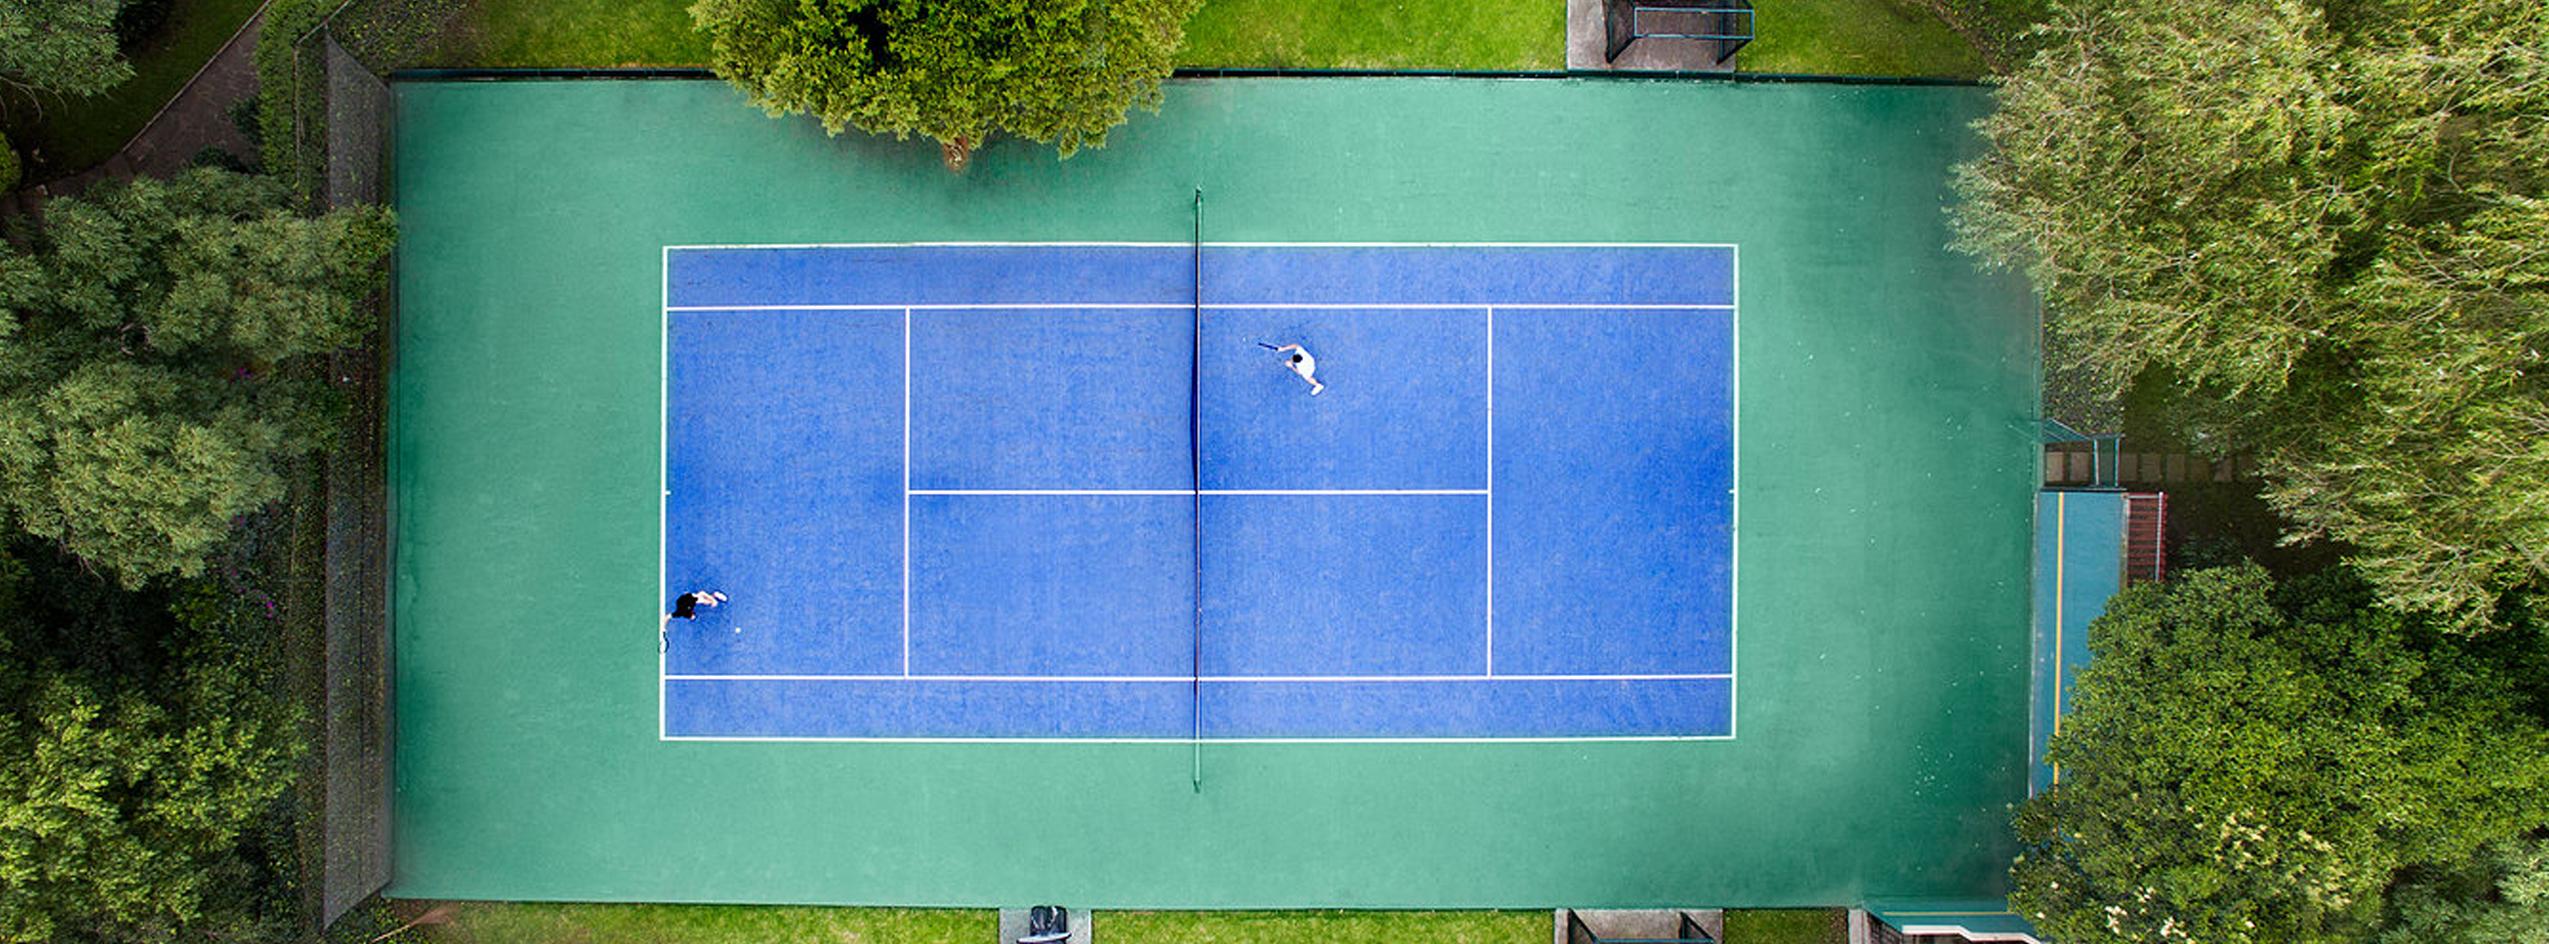 Berger Jensolin Tennis Court Paint 4 Liter Green/Red Primer Immenso